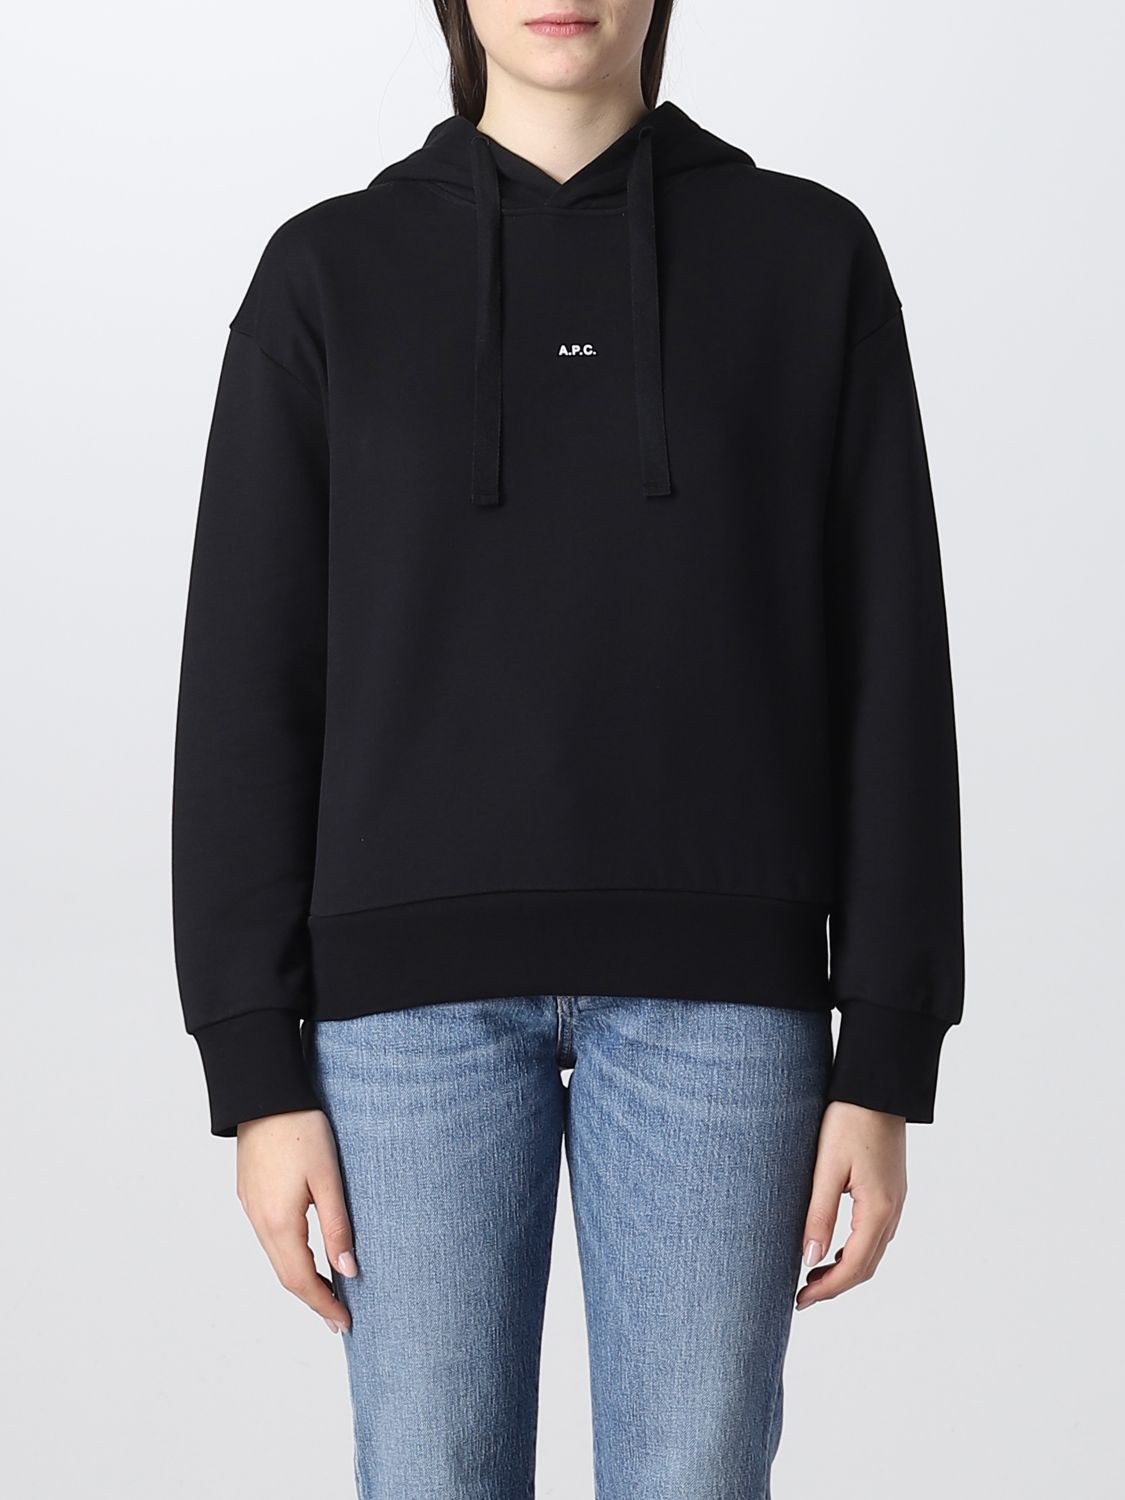 Apc Sweatshirt A.p.c. Woman In Black